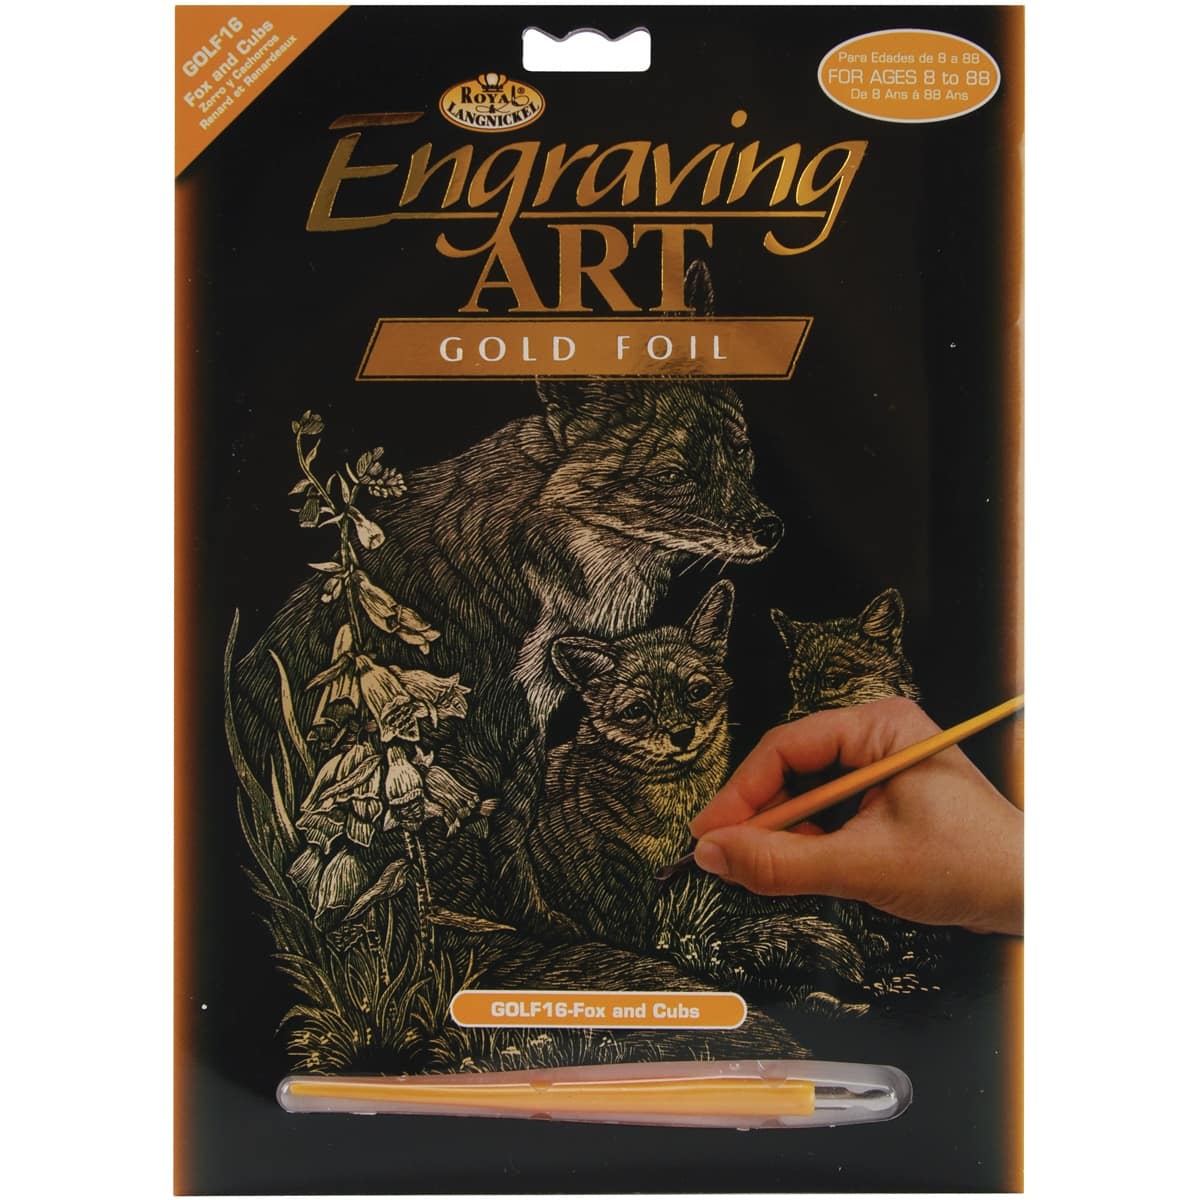 Fox and Cubs Royal and Langnickel Gold Engraving Art 